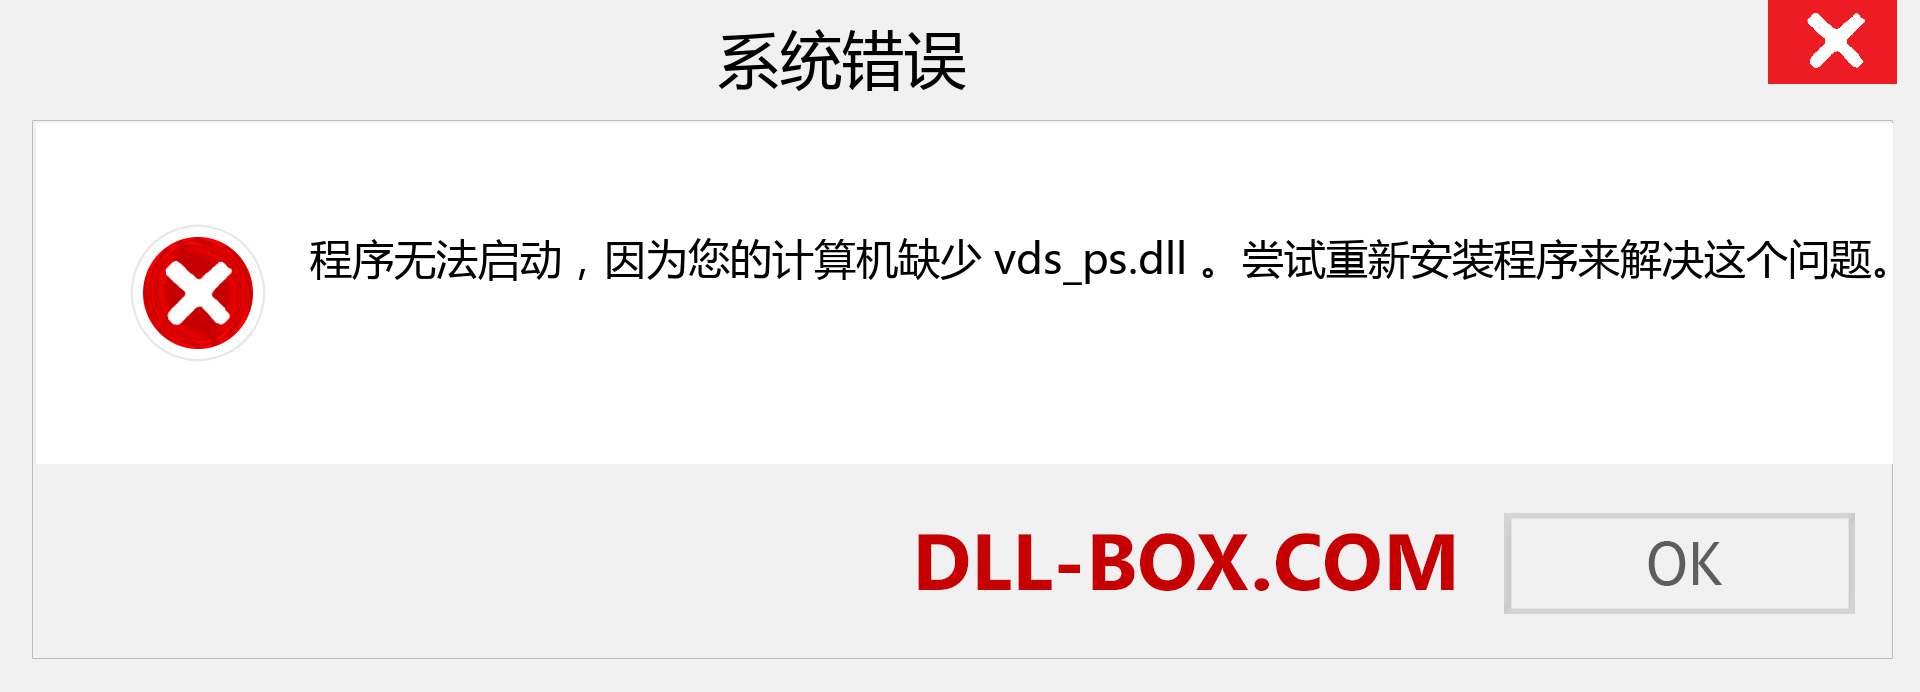 vds_ps.dll 文件丢失？。 适用于 Windows 7、8、10 的下载 - 修复 Windows、照片、图像上的 vds_ps dll 丢失错误